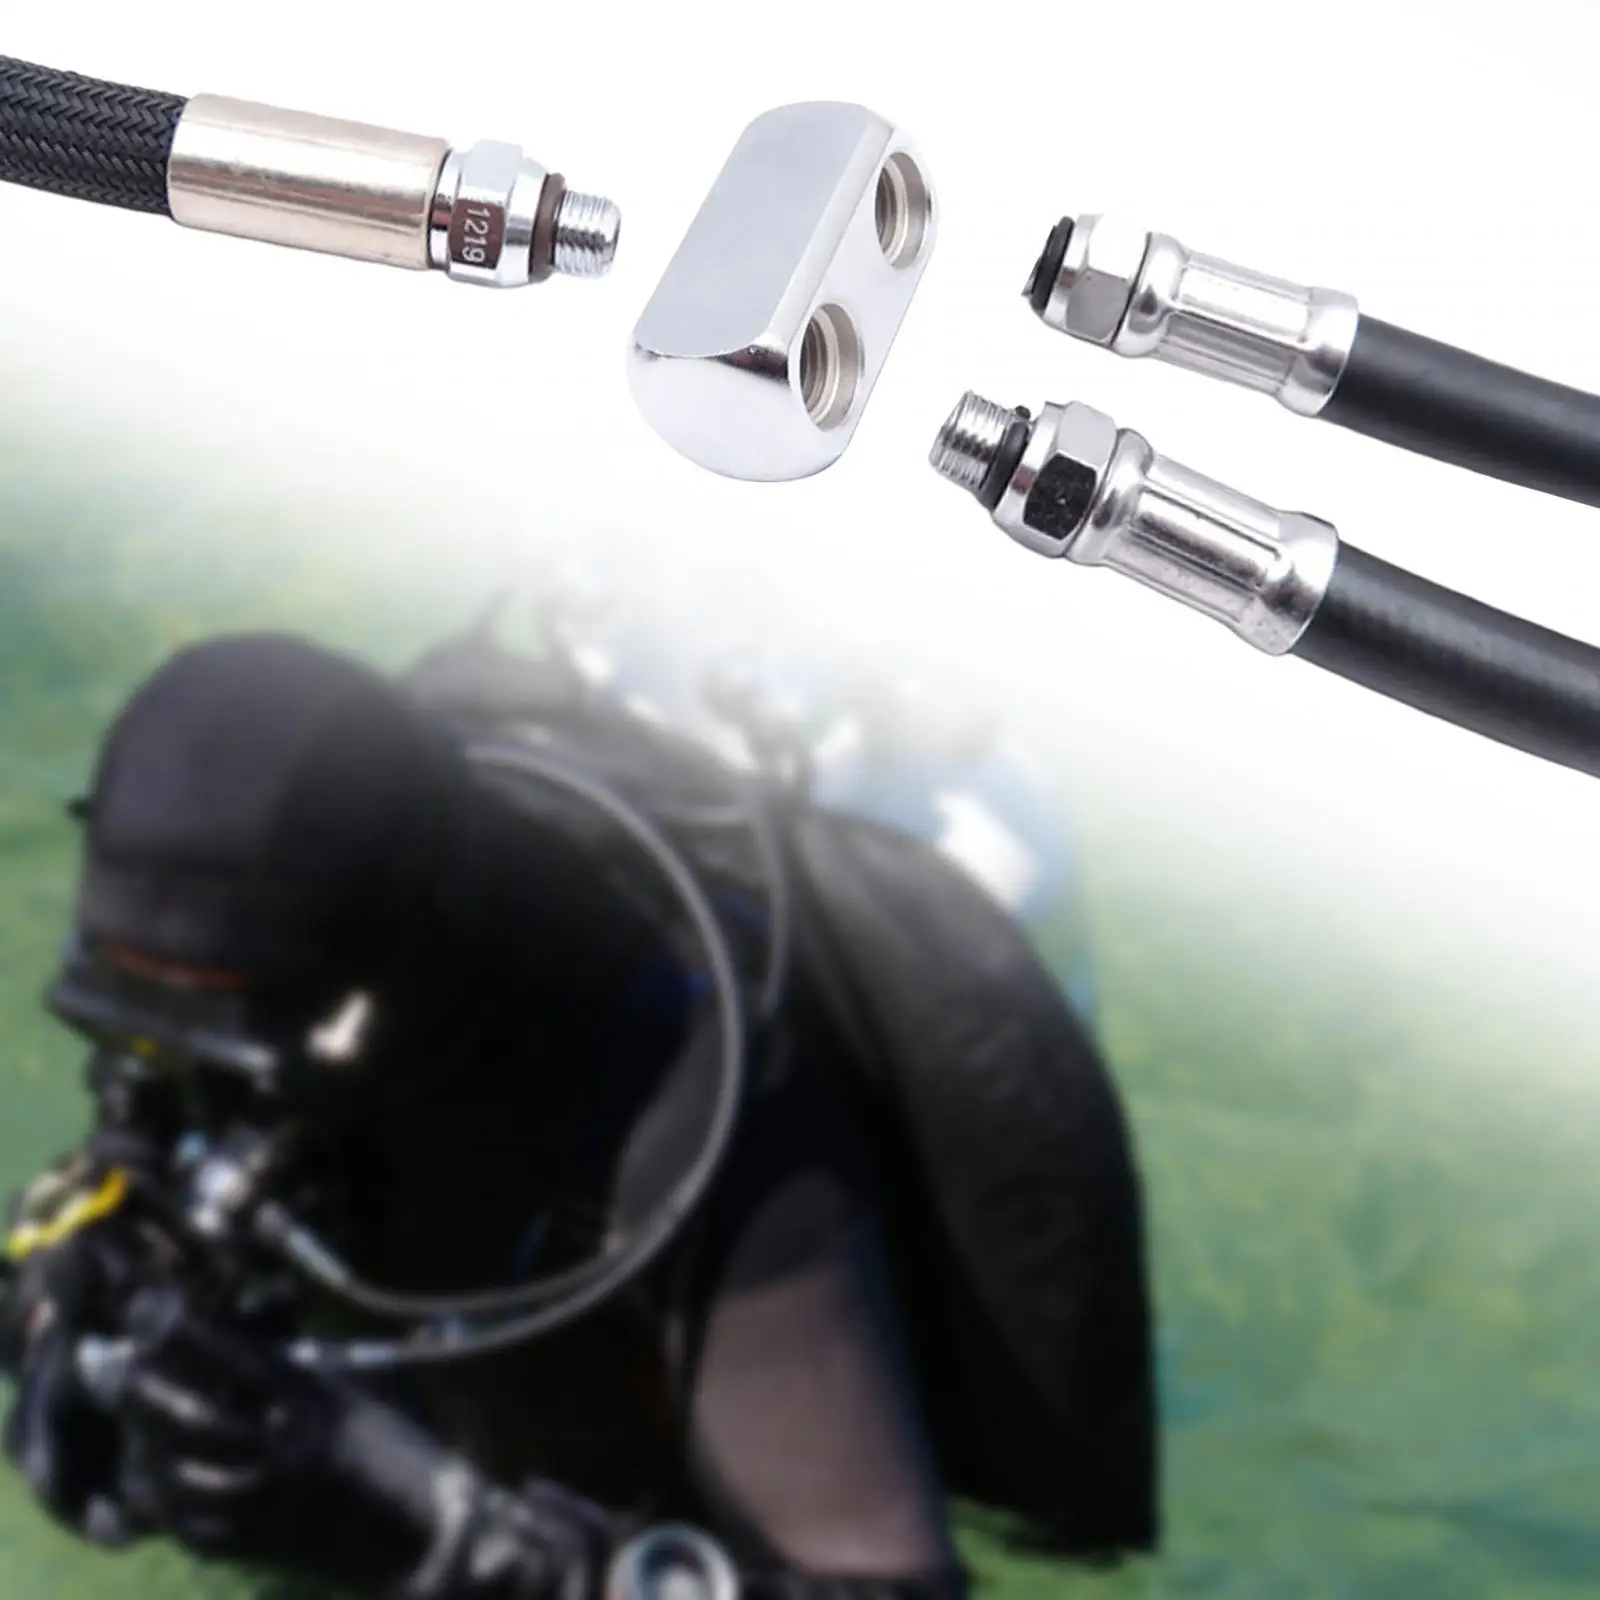 Scuba Diving Regulator Adapter Connector Brass Brass Snorkeling Wear Resistant Equipment Low Pressure Pipe Adapter Accessories